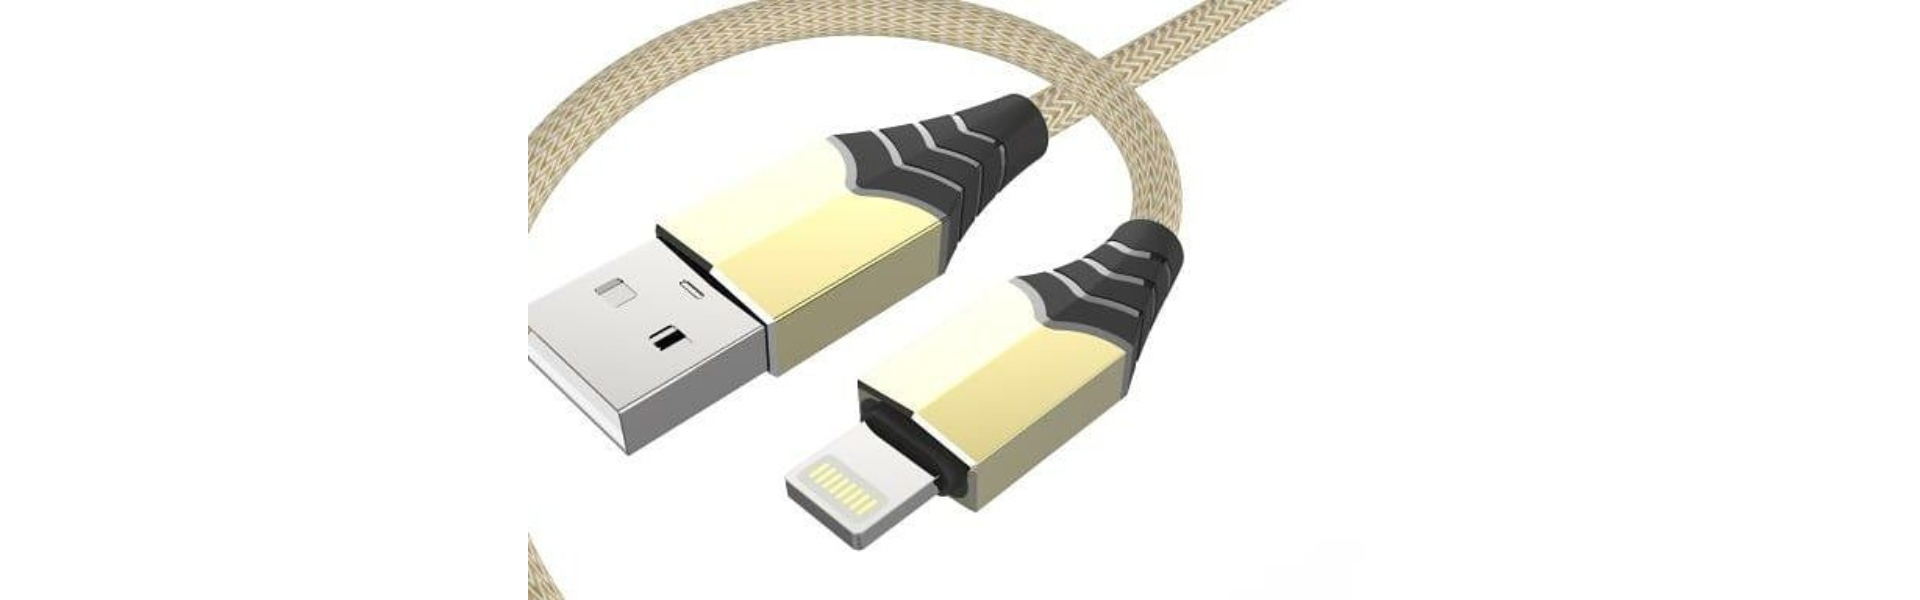 Línea USB, línea de datos USB, línea de datos,Dong Guan Rong Pin Electronic Technology Co.Ltd